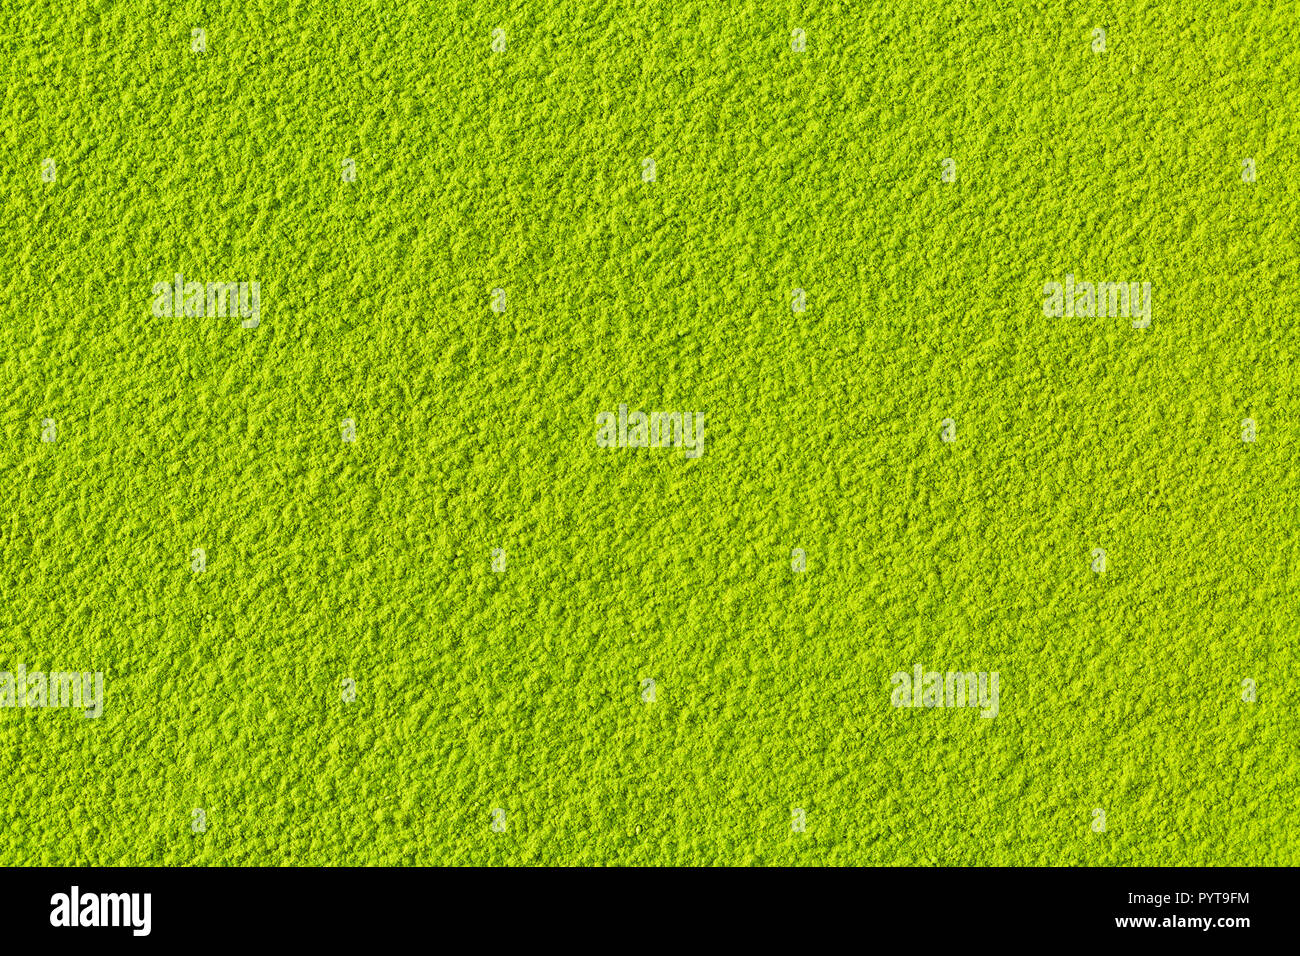 Green matcha tea powder full frame flat lay as image background Stock Photo